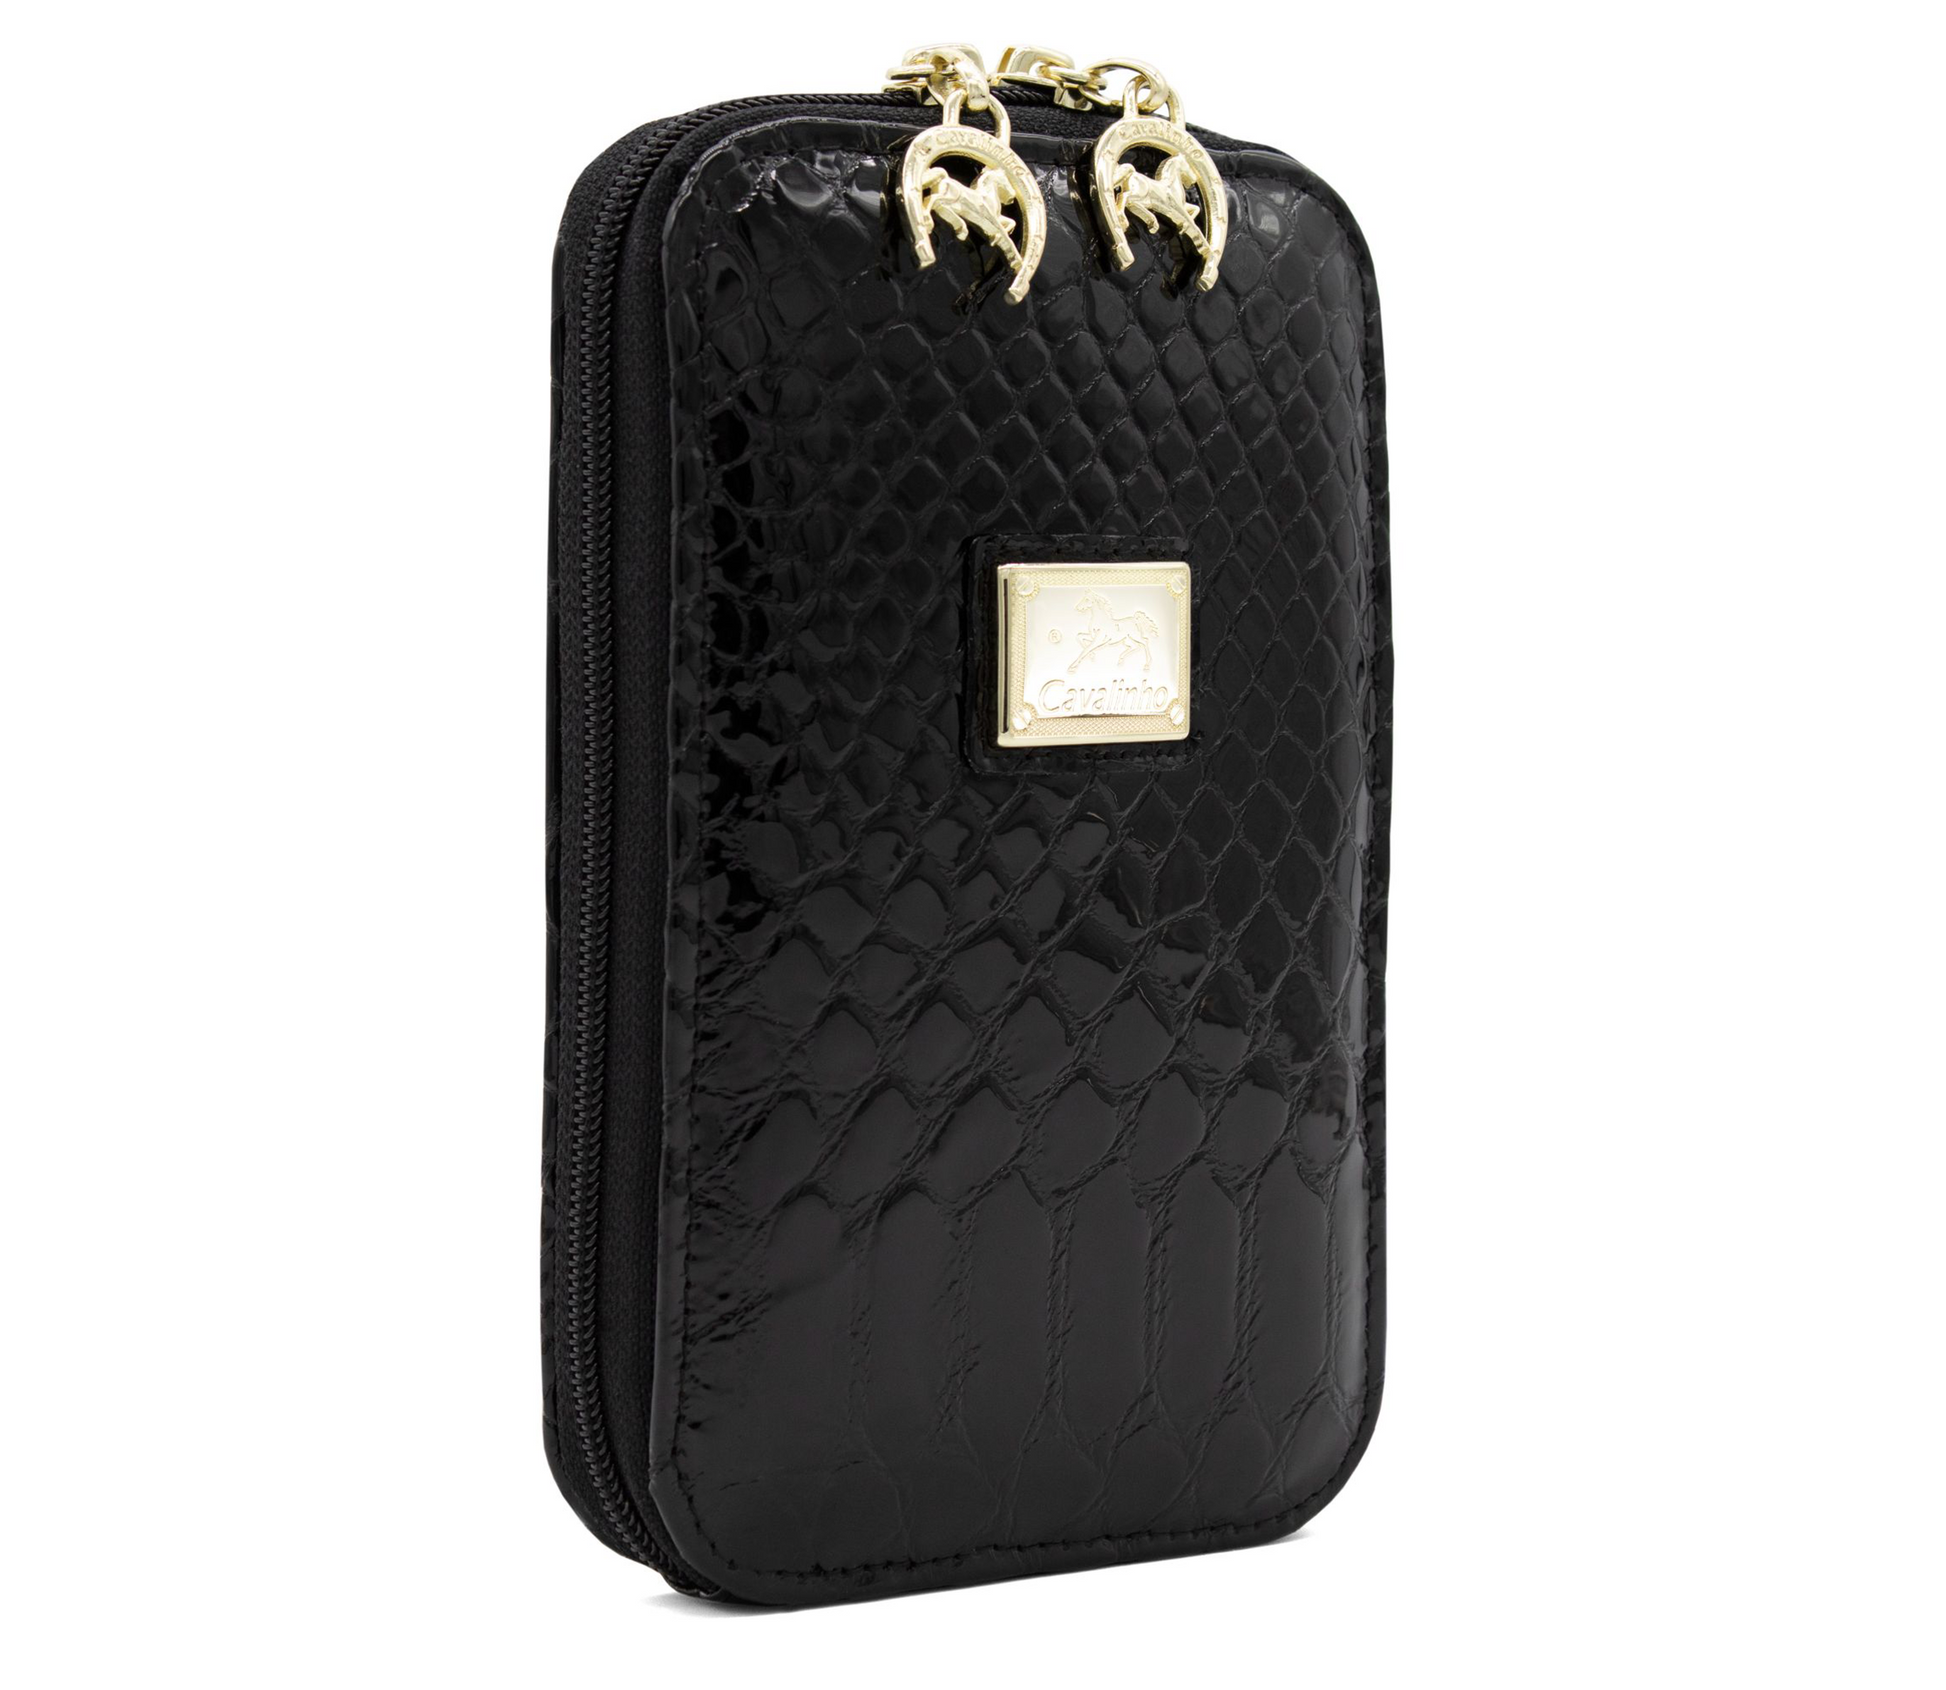 Cavalinho Galope Patent Leather Phone Purse - Black - Artboard5